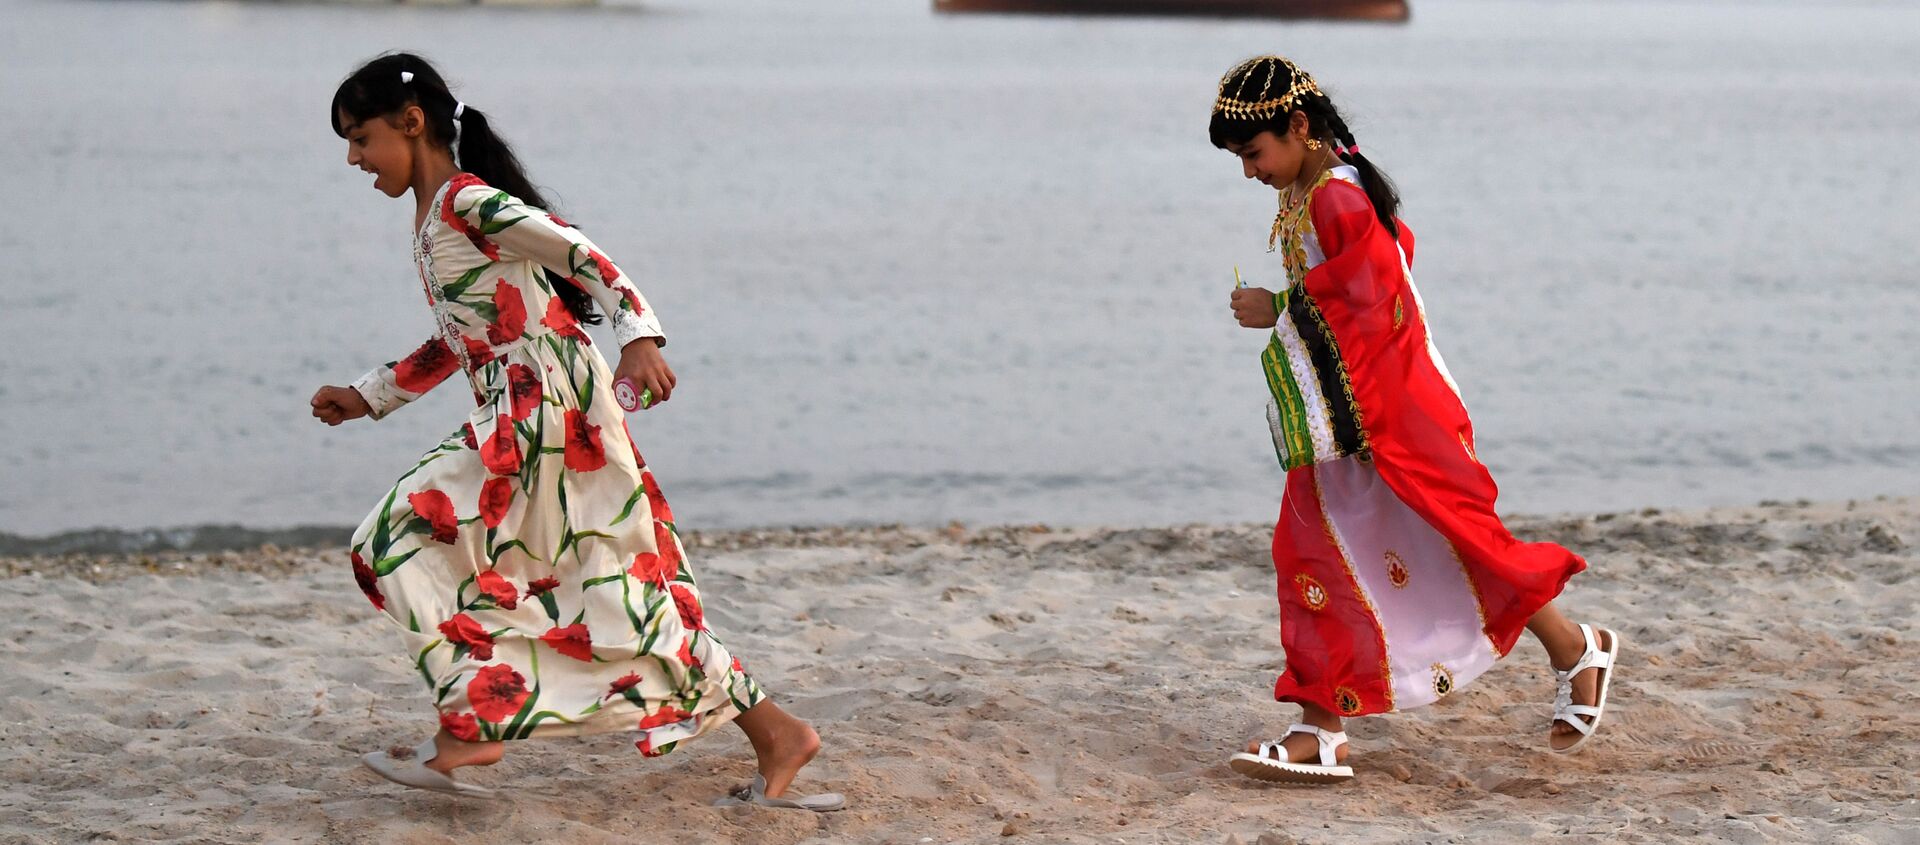 Девочки бегут по берегу острова Далма, ОАЭ - سبوتنيك عربي, 1920, 11.10.2021